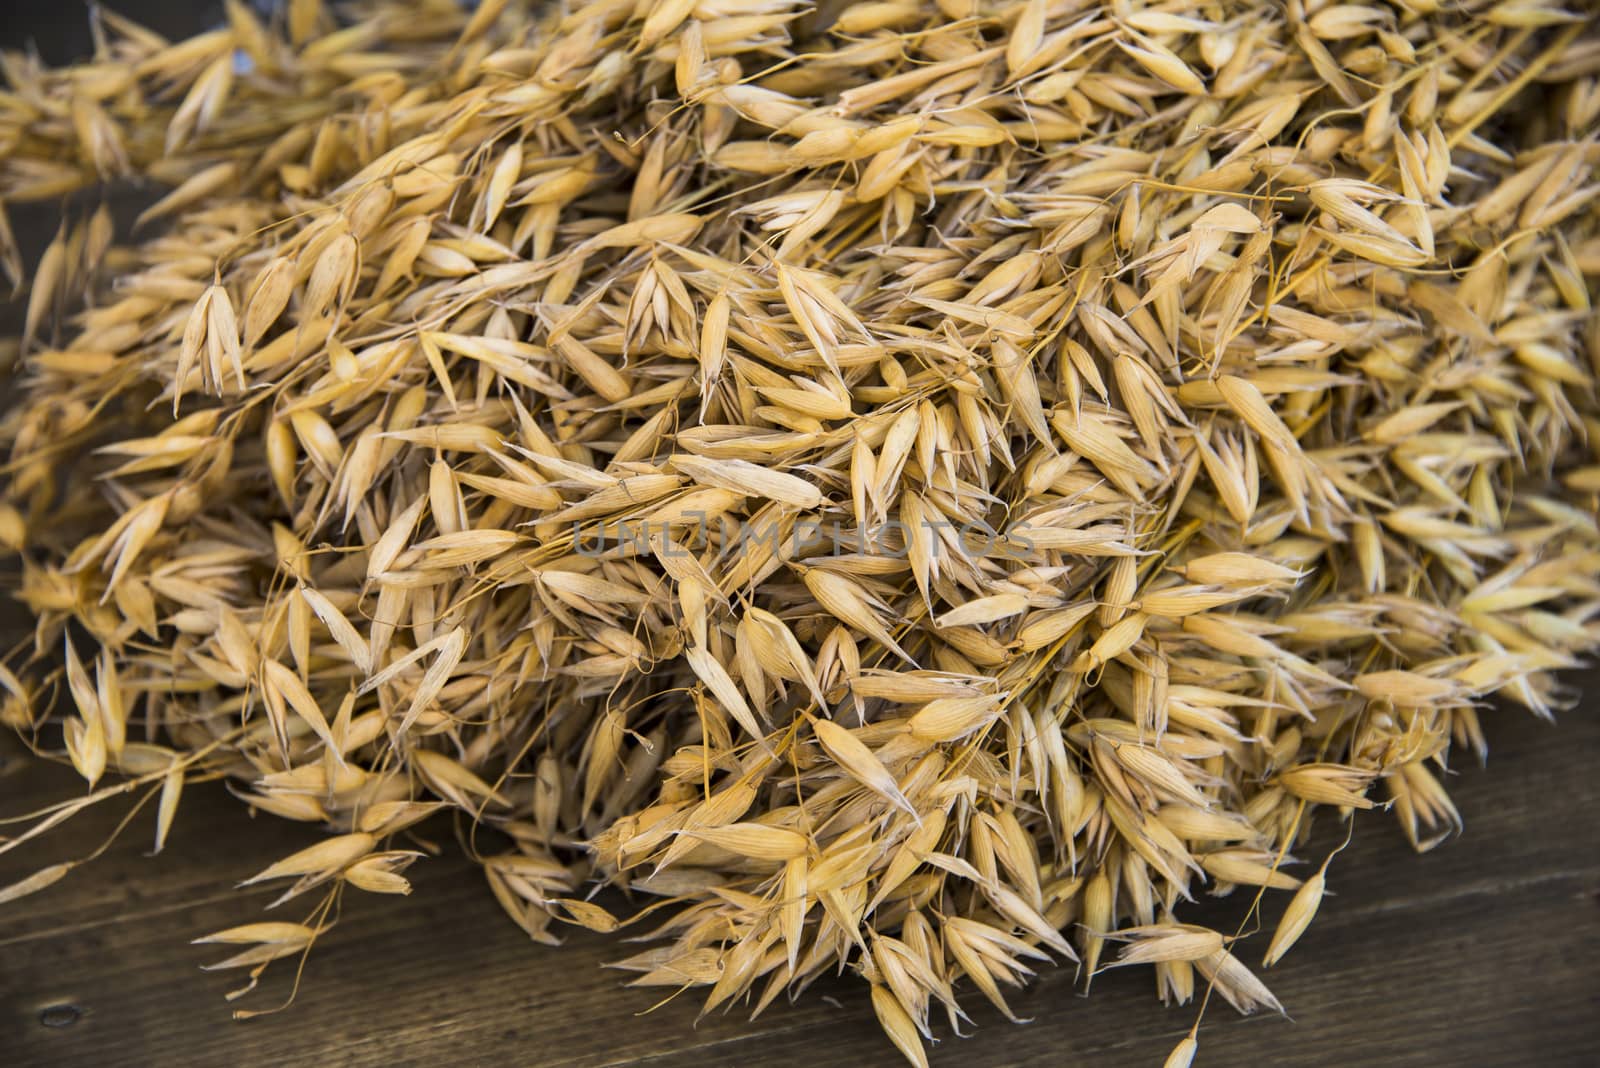 An oats sheaf lying on a table